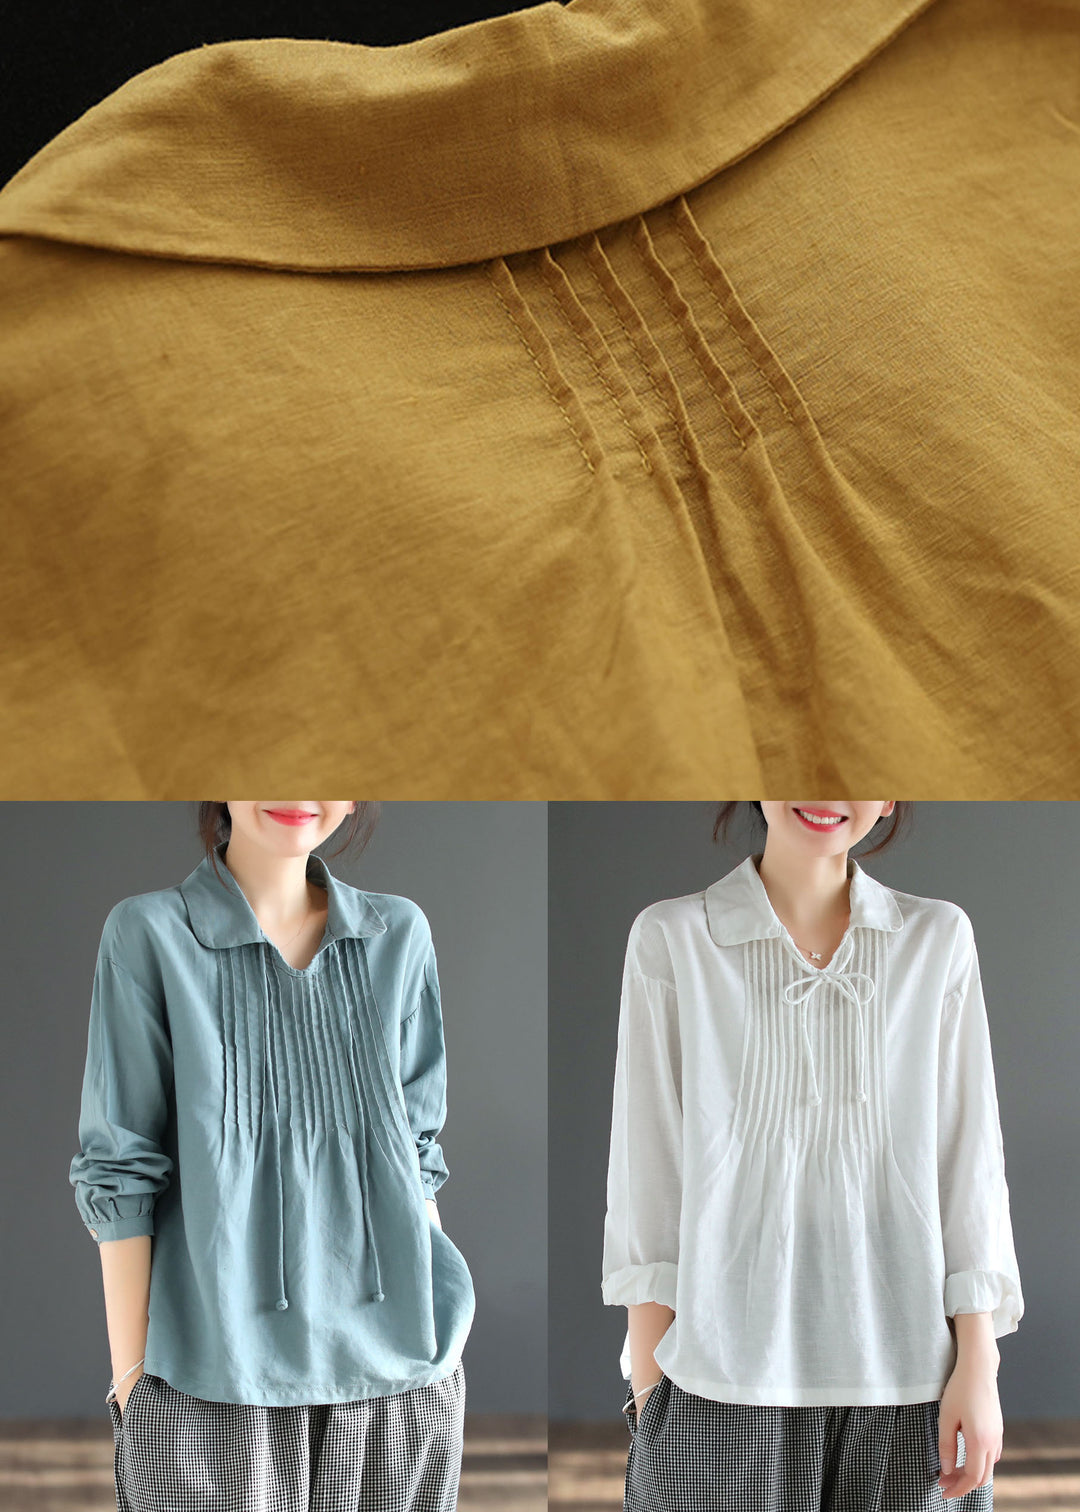 Art Yellow Peter Pan Collar Wrinkled Patchwork Cotton Shirt Top Spring